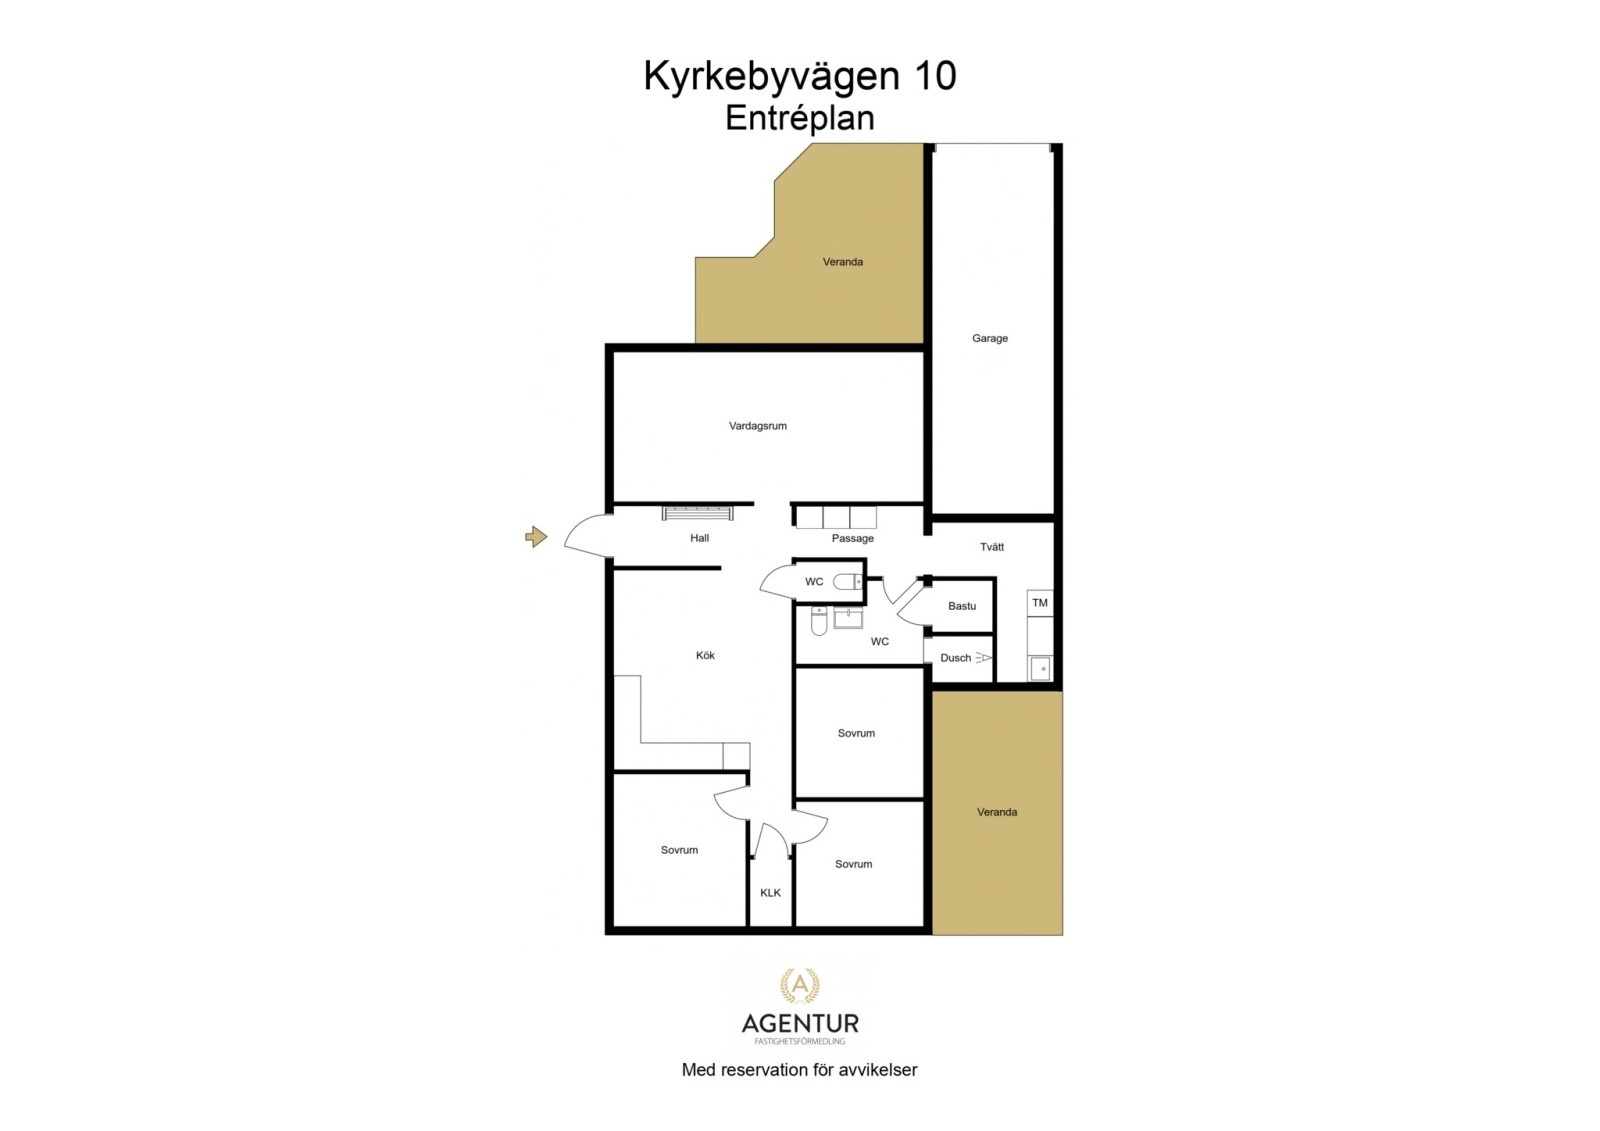 2D Floor Plan - Entréplan - Letterhead Kyrkebyvägen 10